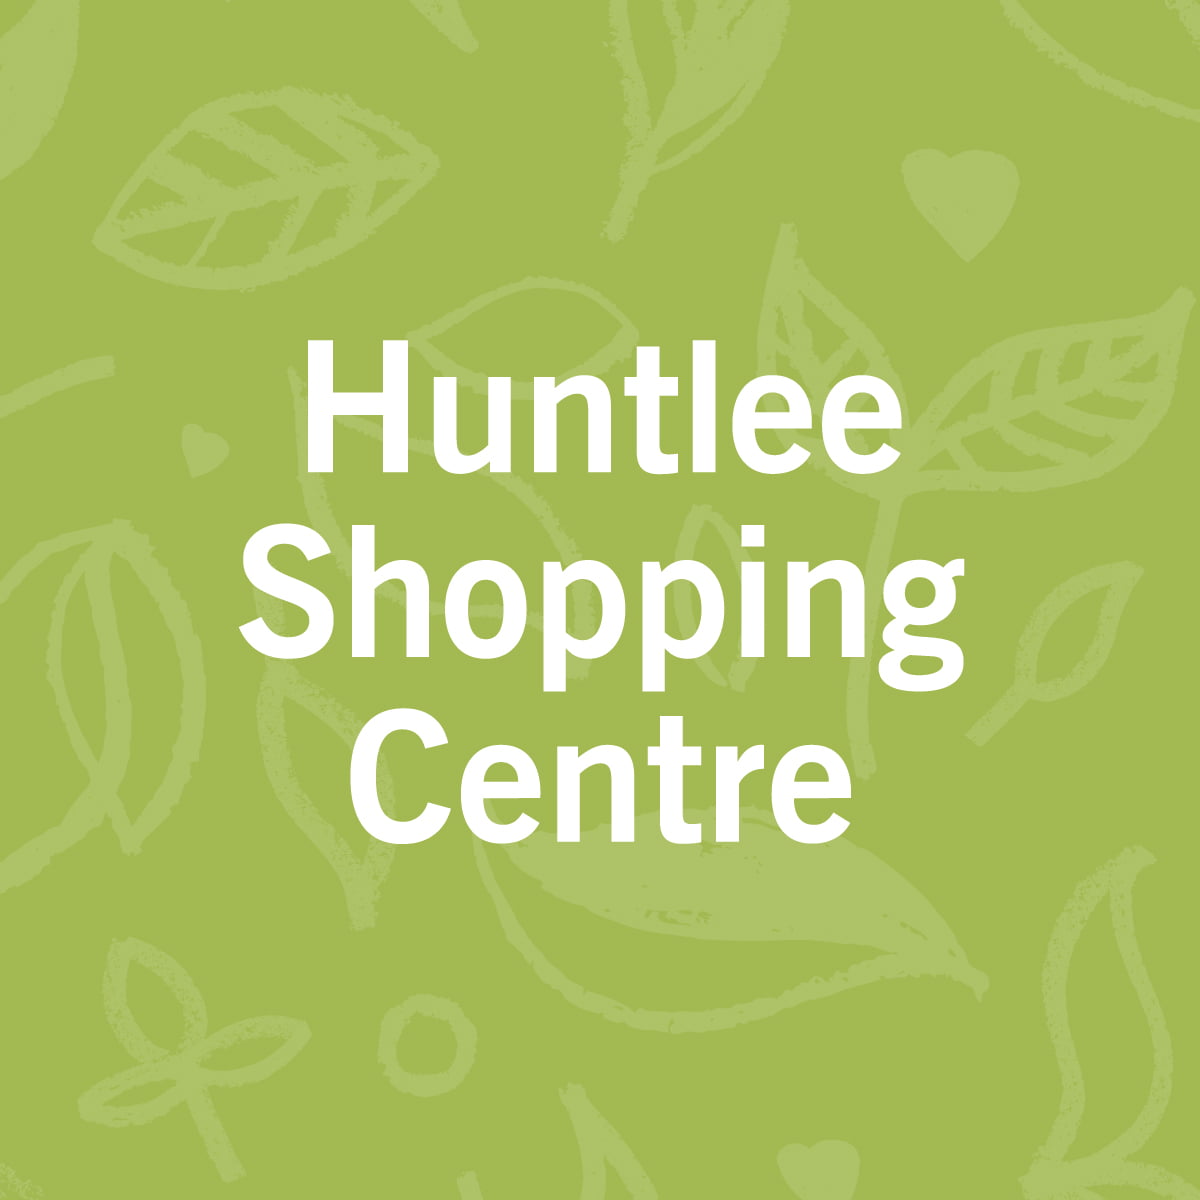 Huntlee Shopping Centre